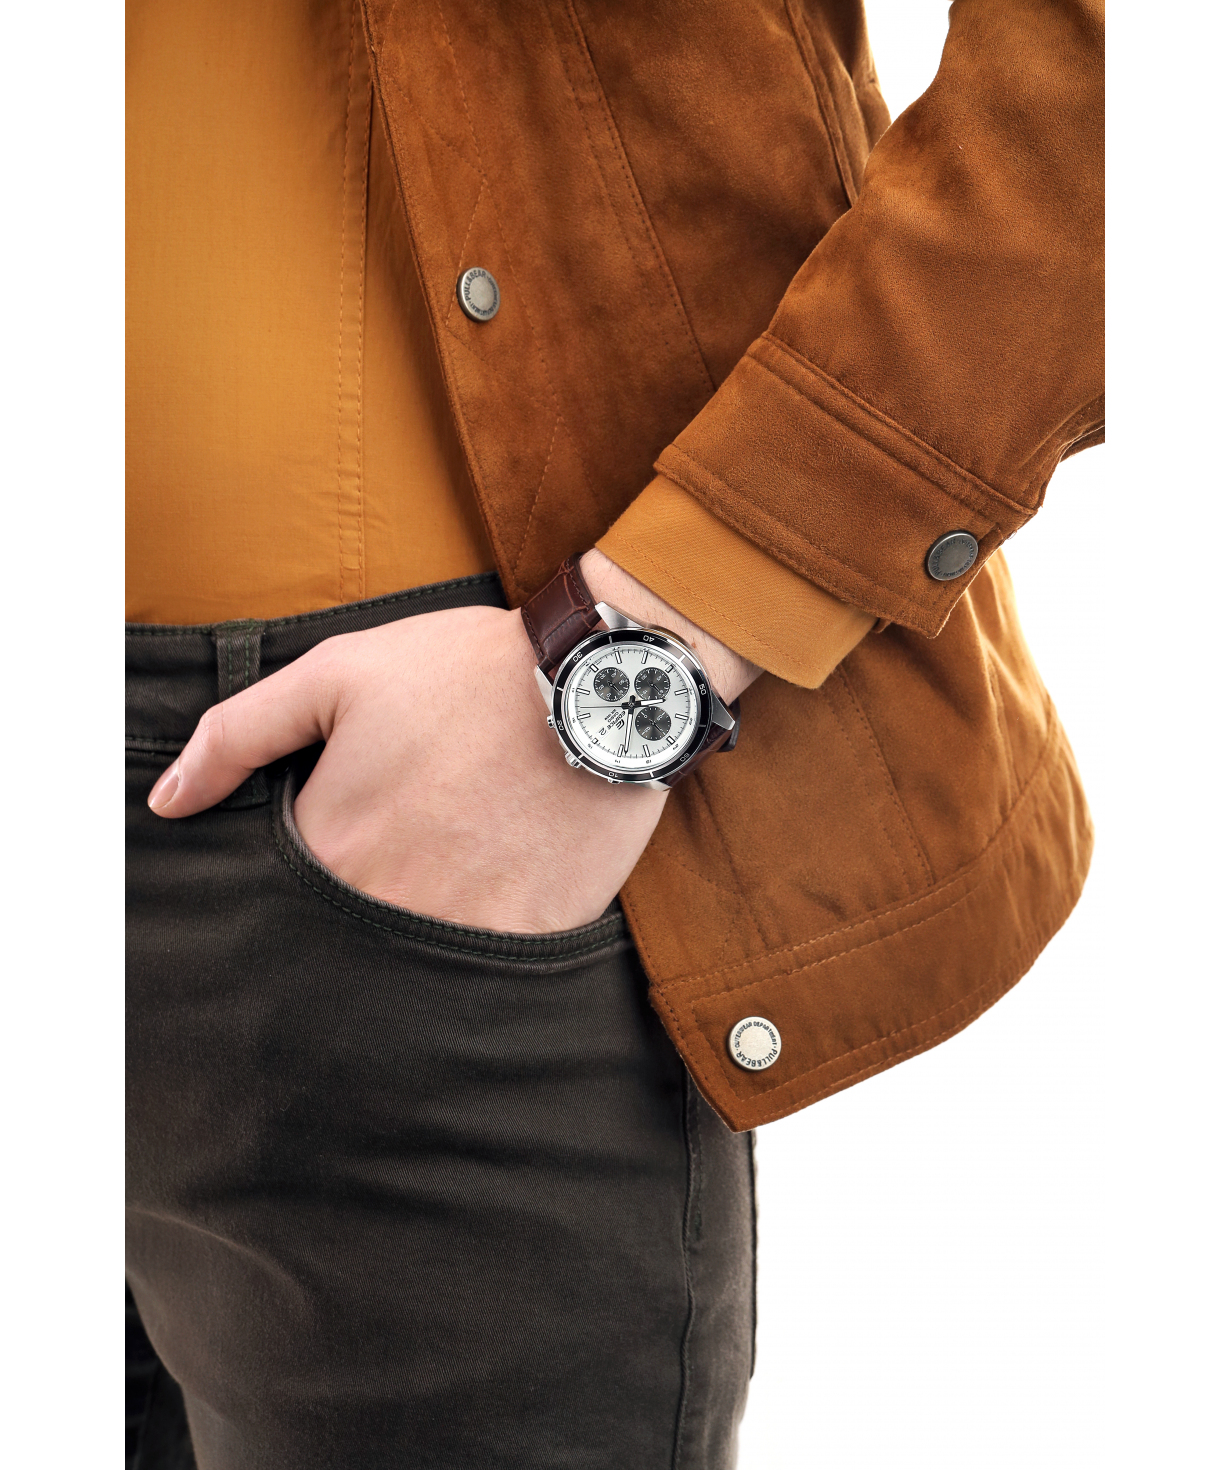 Ժամացույց «Casio» ձեռքի EFR-526L-7AVUDF